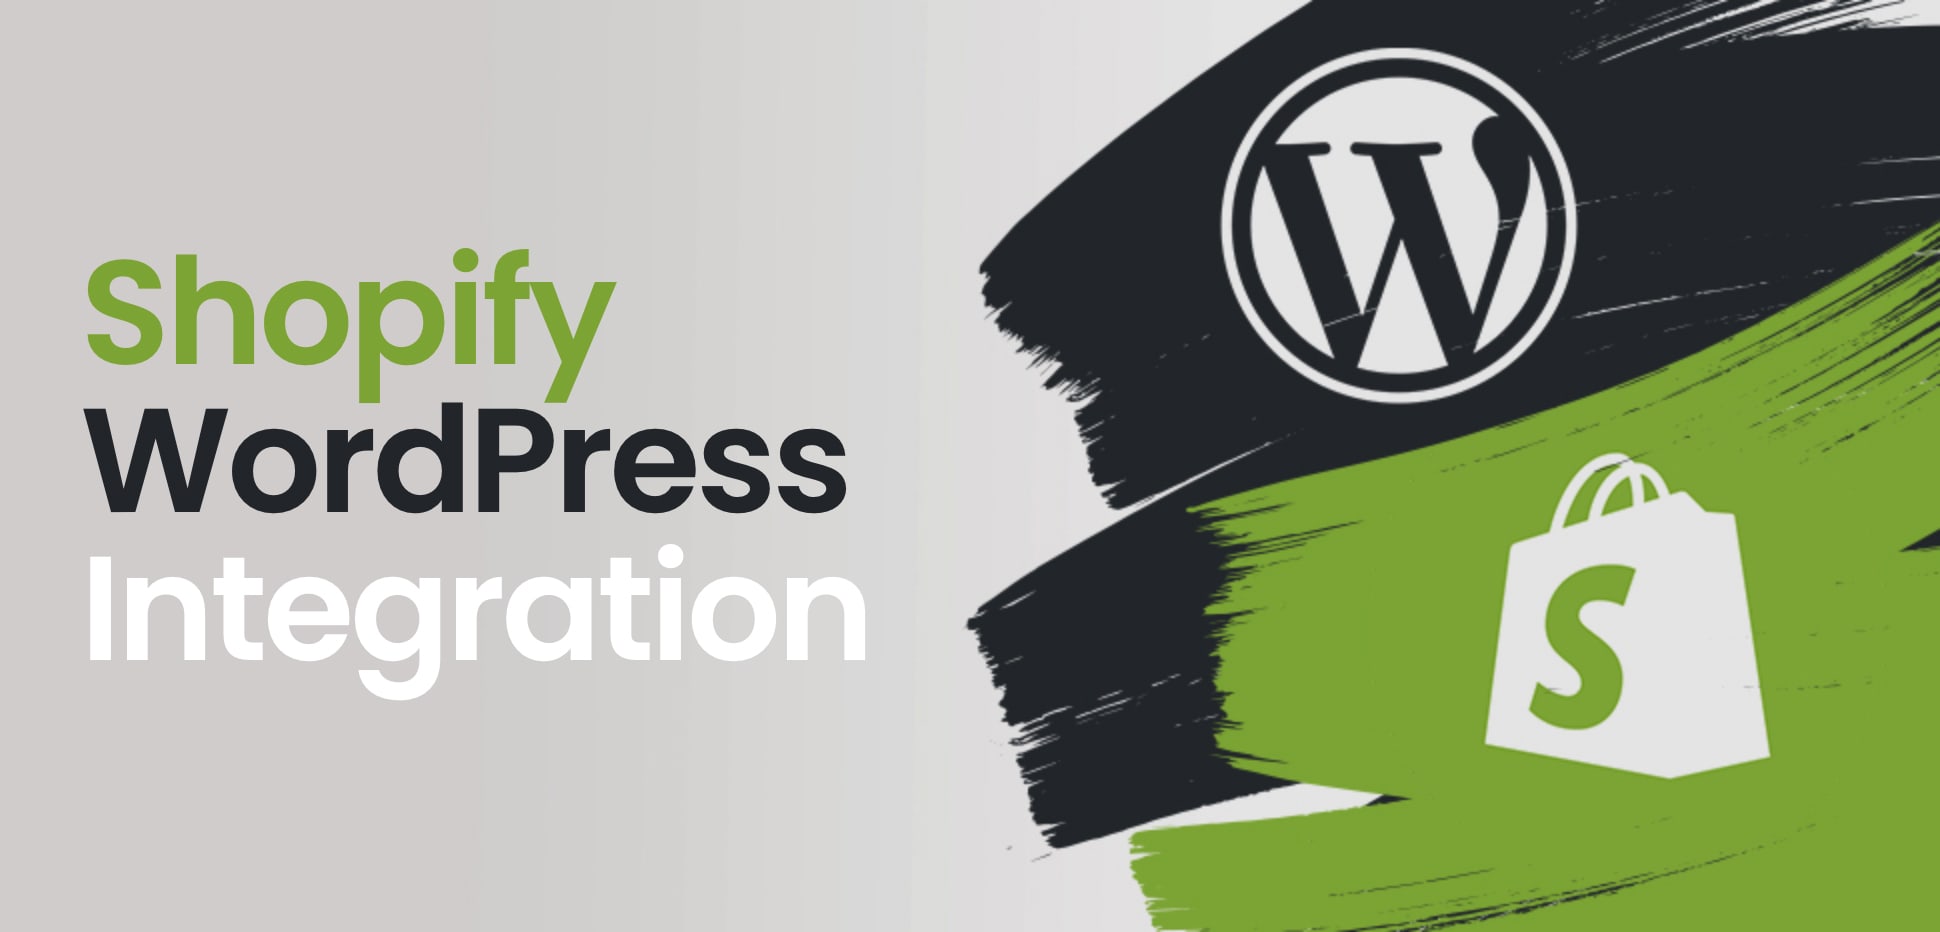 Shopify WordPress Plugin Integration: How it Works